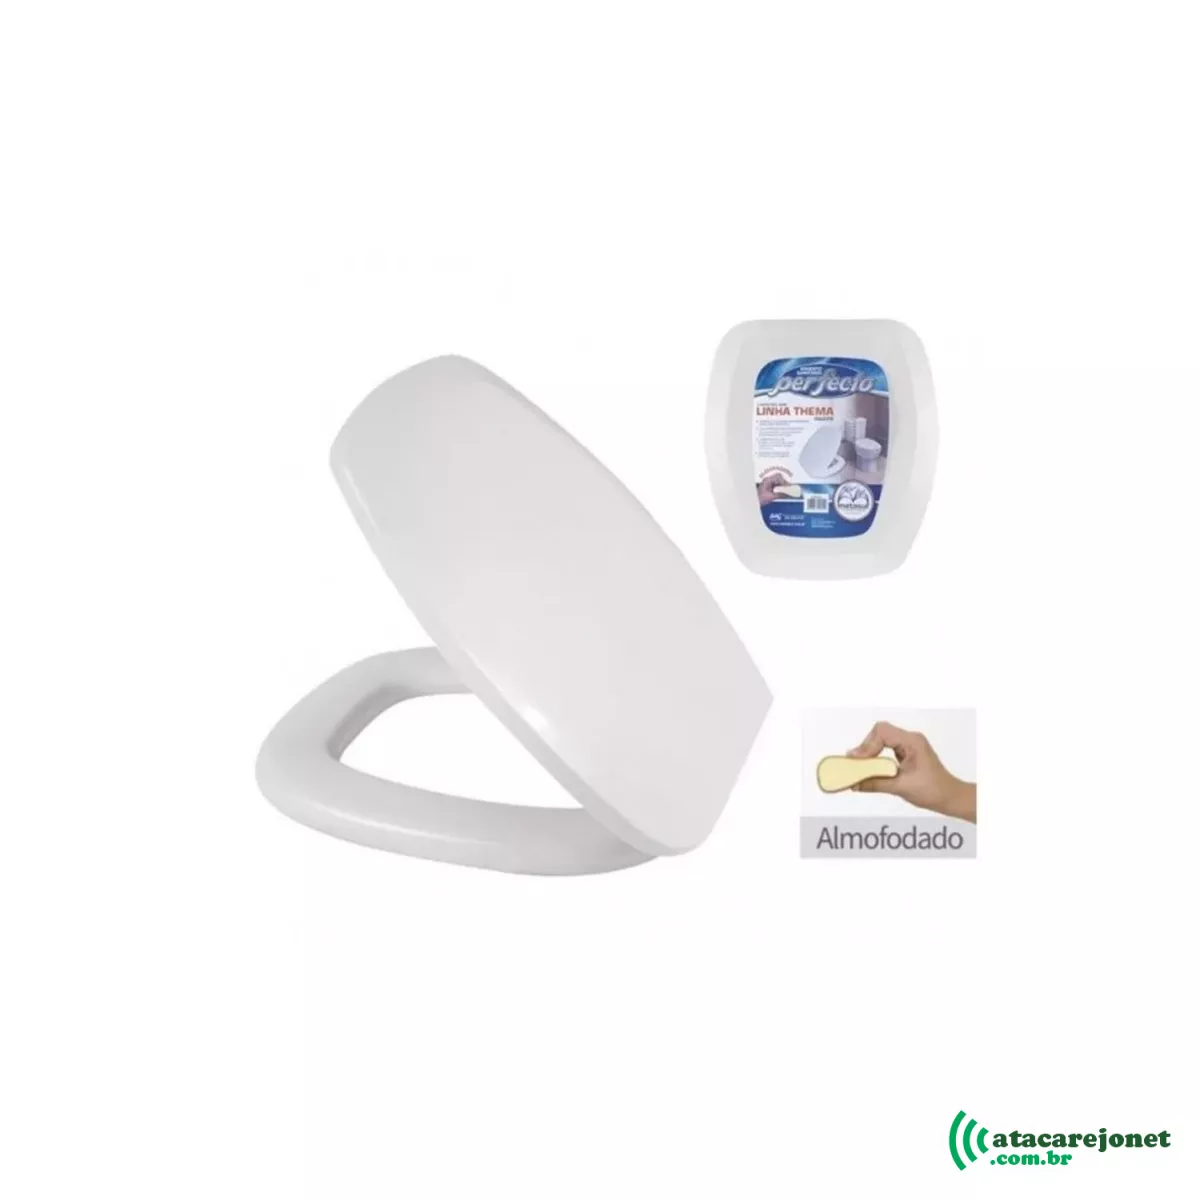 Assento Sanitário Plástico Almofadado Perfecto Thema Branco - Metasul